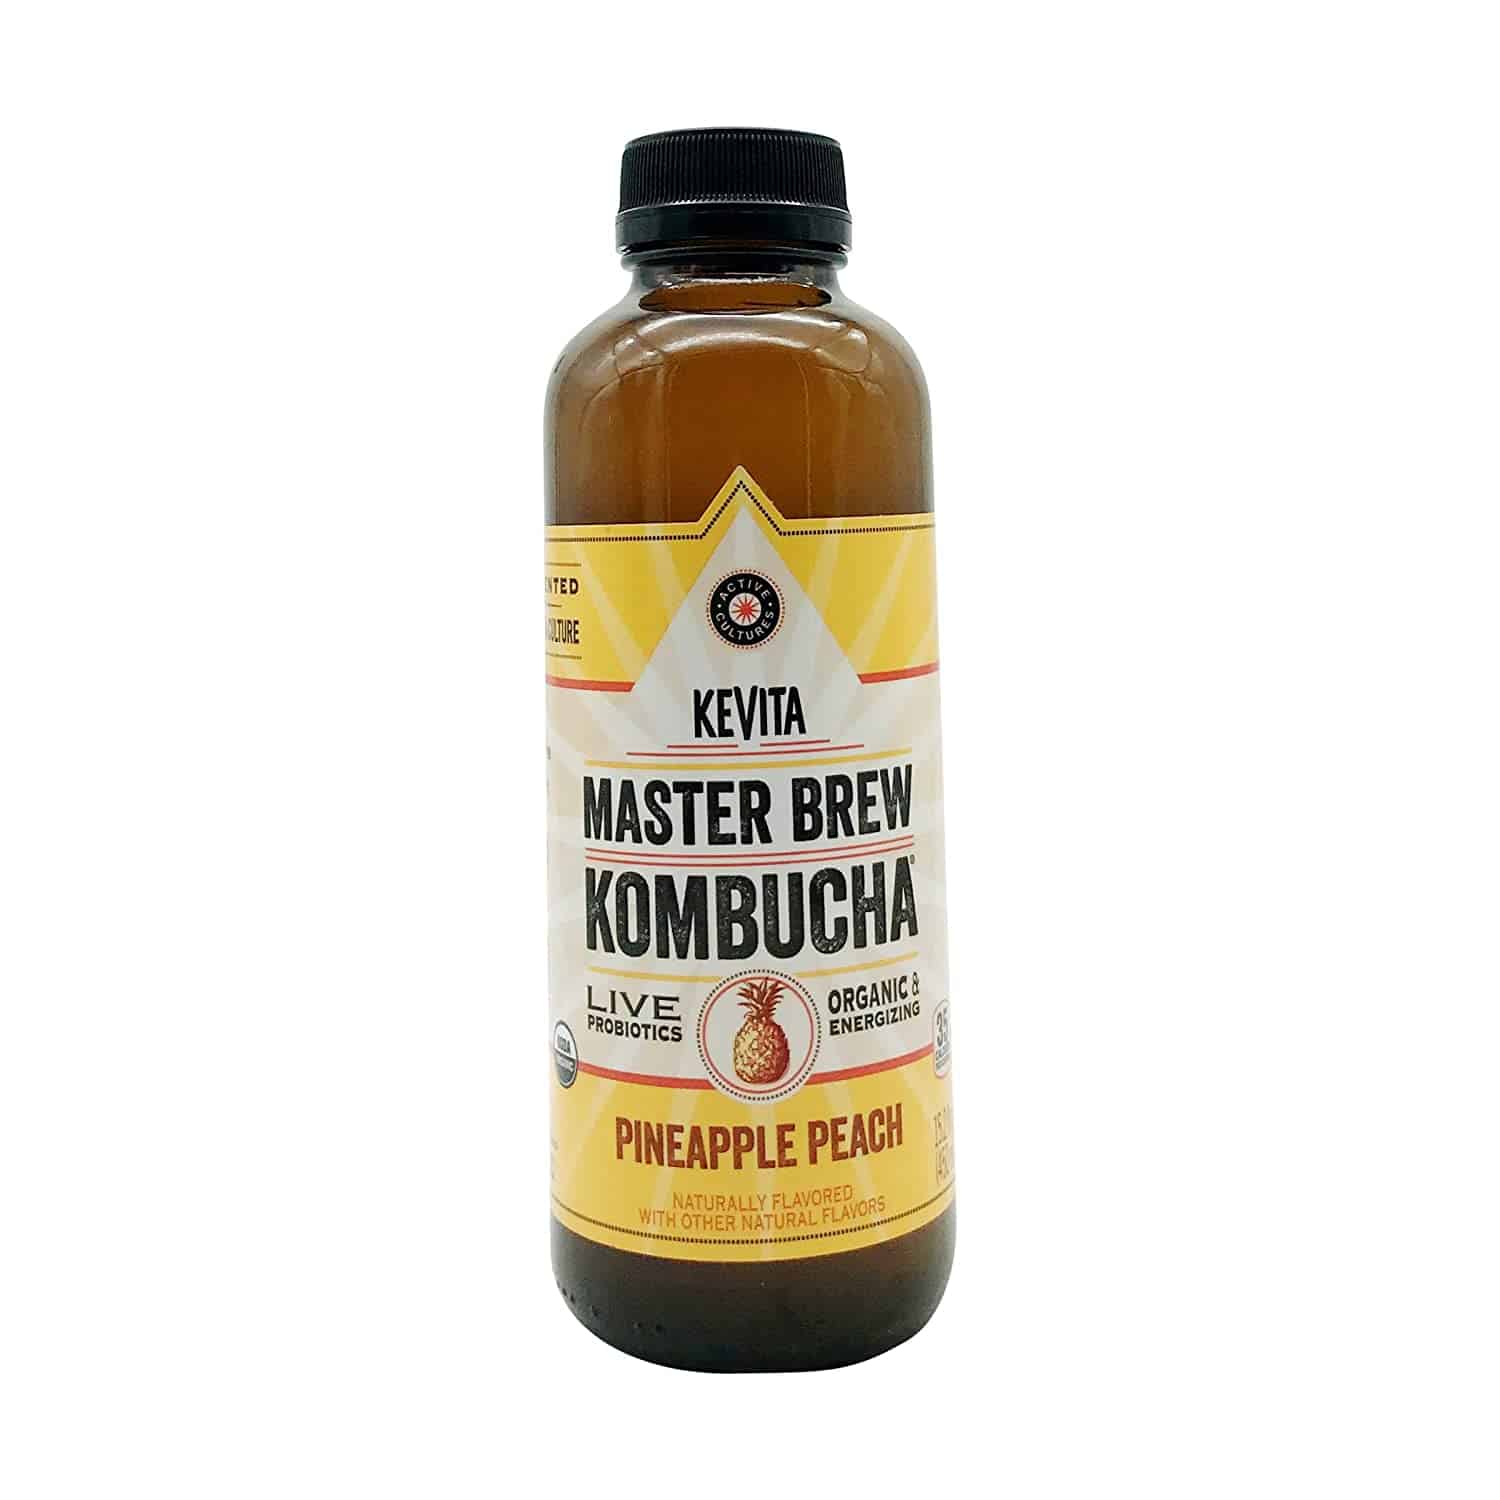 KeVita Master Brew Kombucha, Pineapple Peach, 15.2 oz